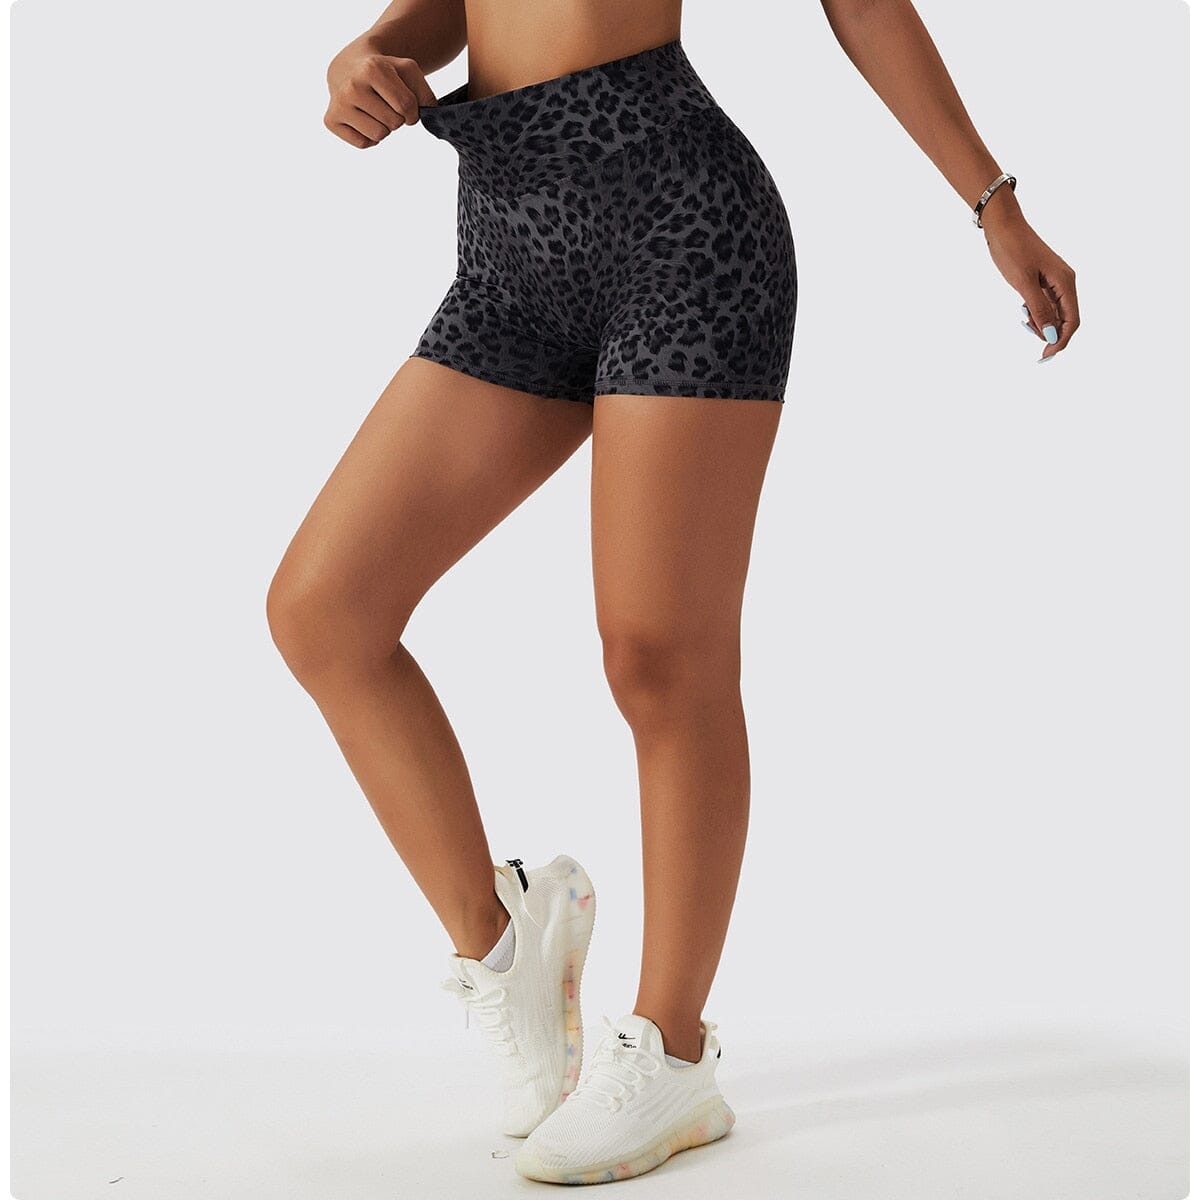 Chic Leopard Shorts Activewear Truetights Gray S 